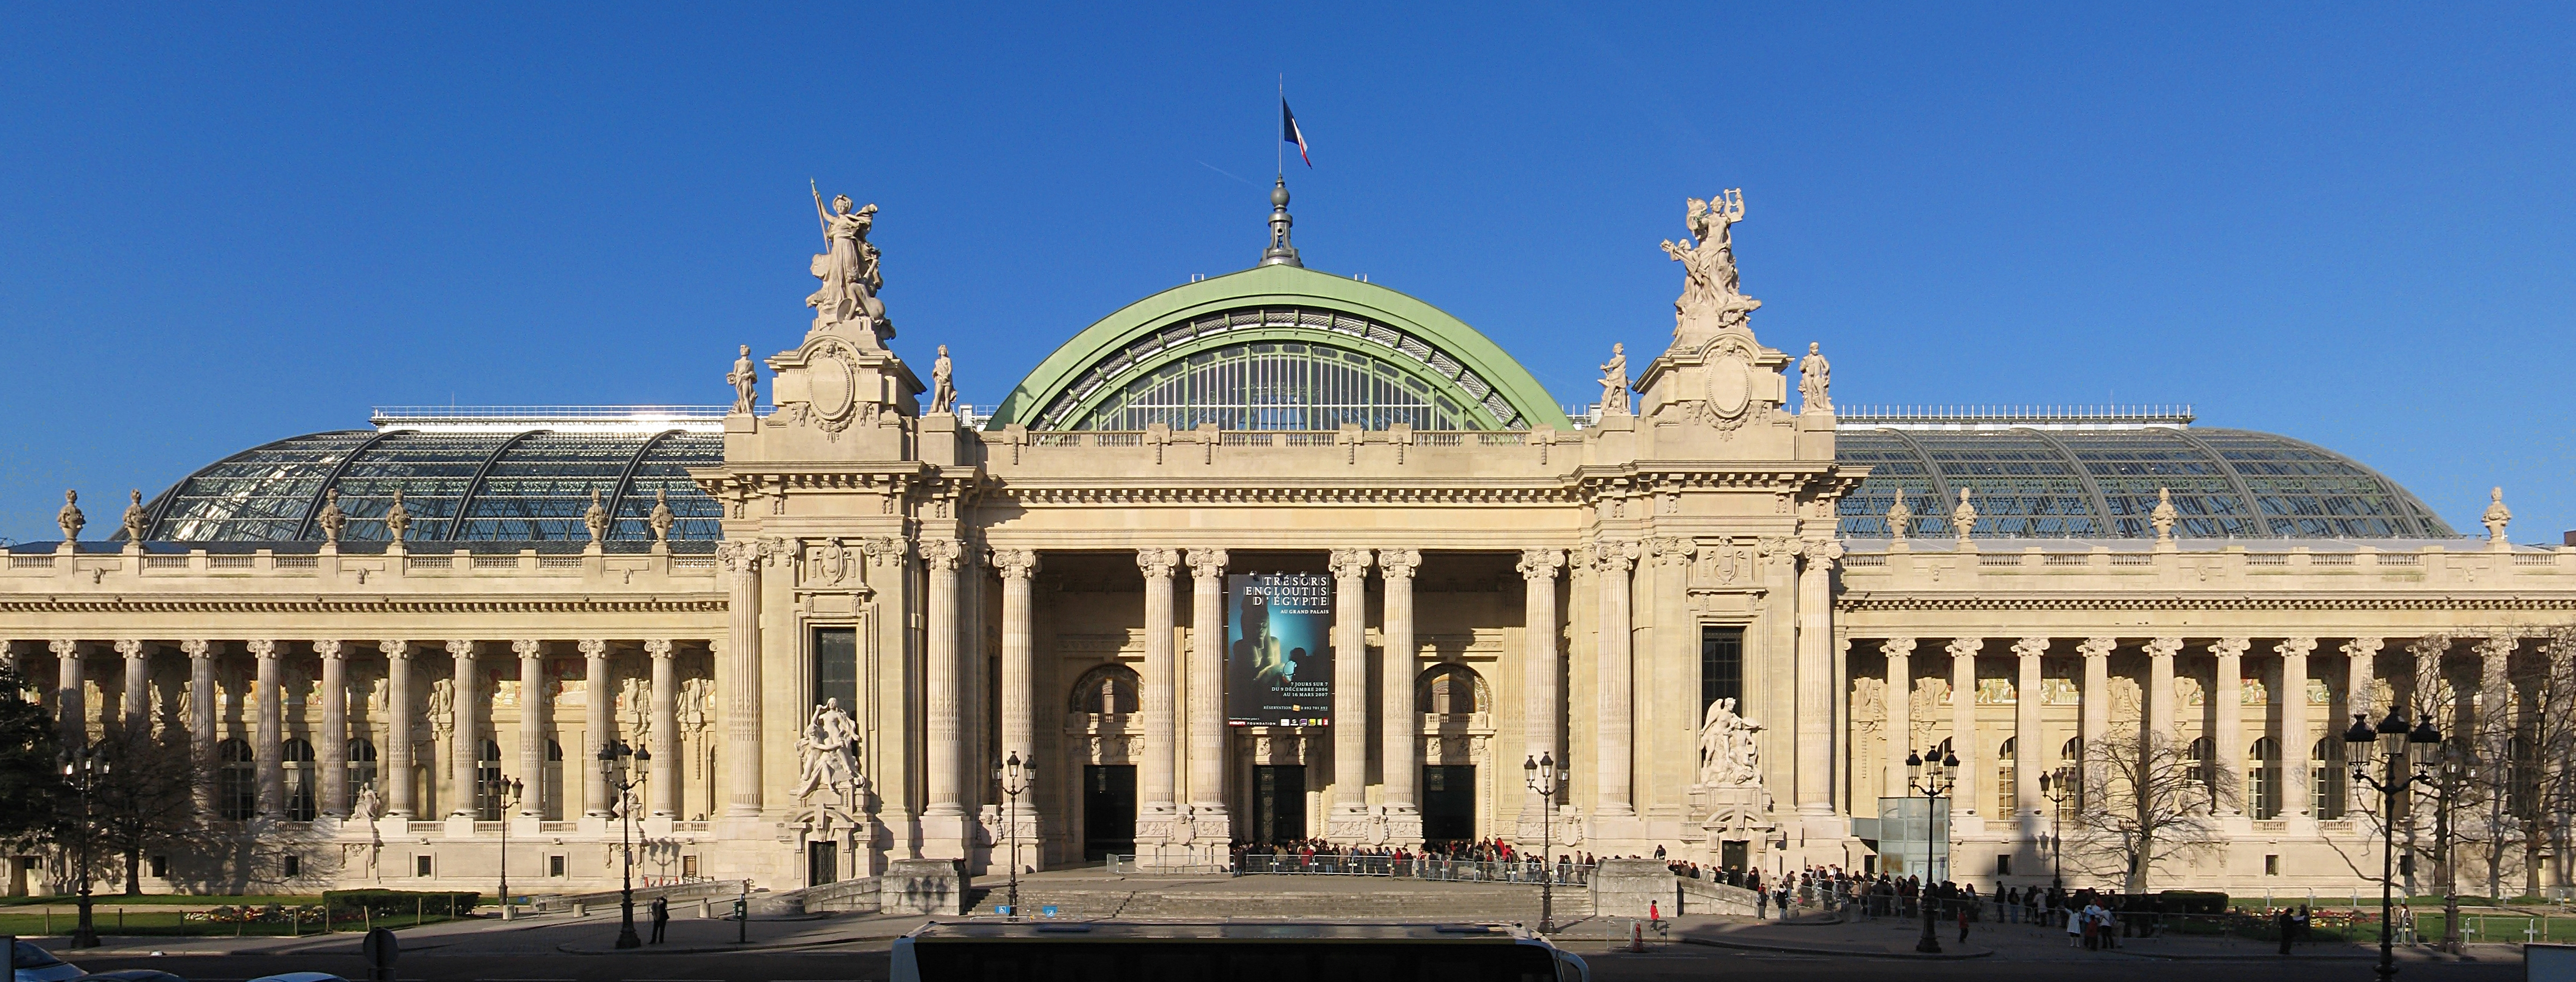 2CV Paris Tour : Paris Sightseeing Tours by 2CV! The Grand Palais